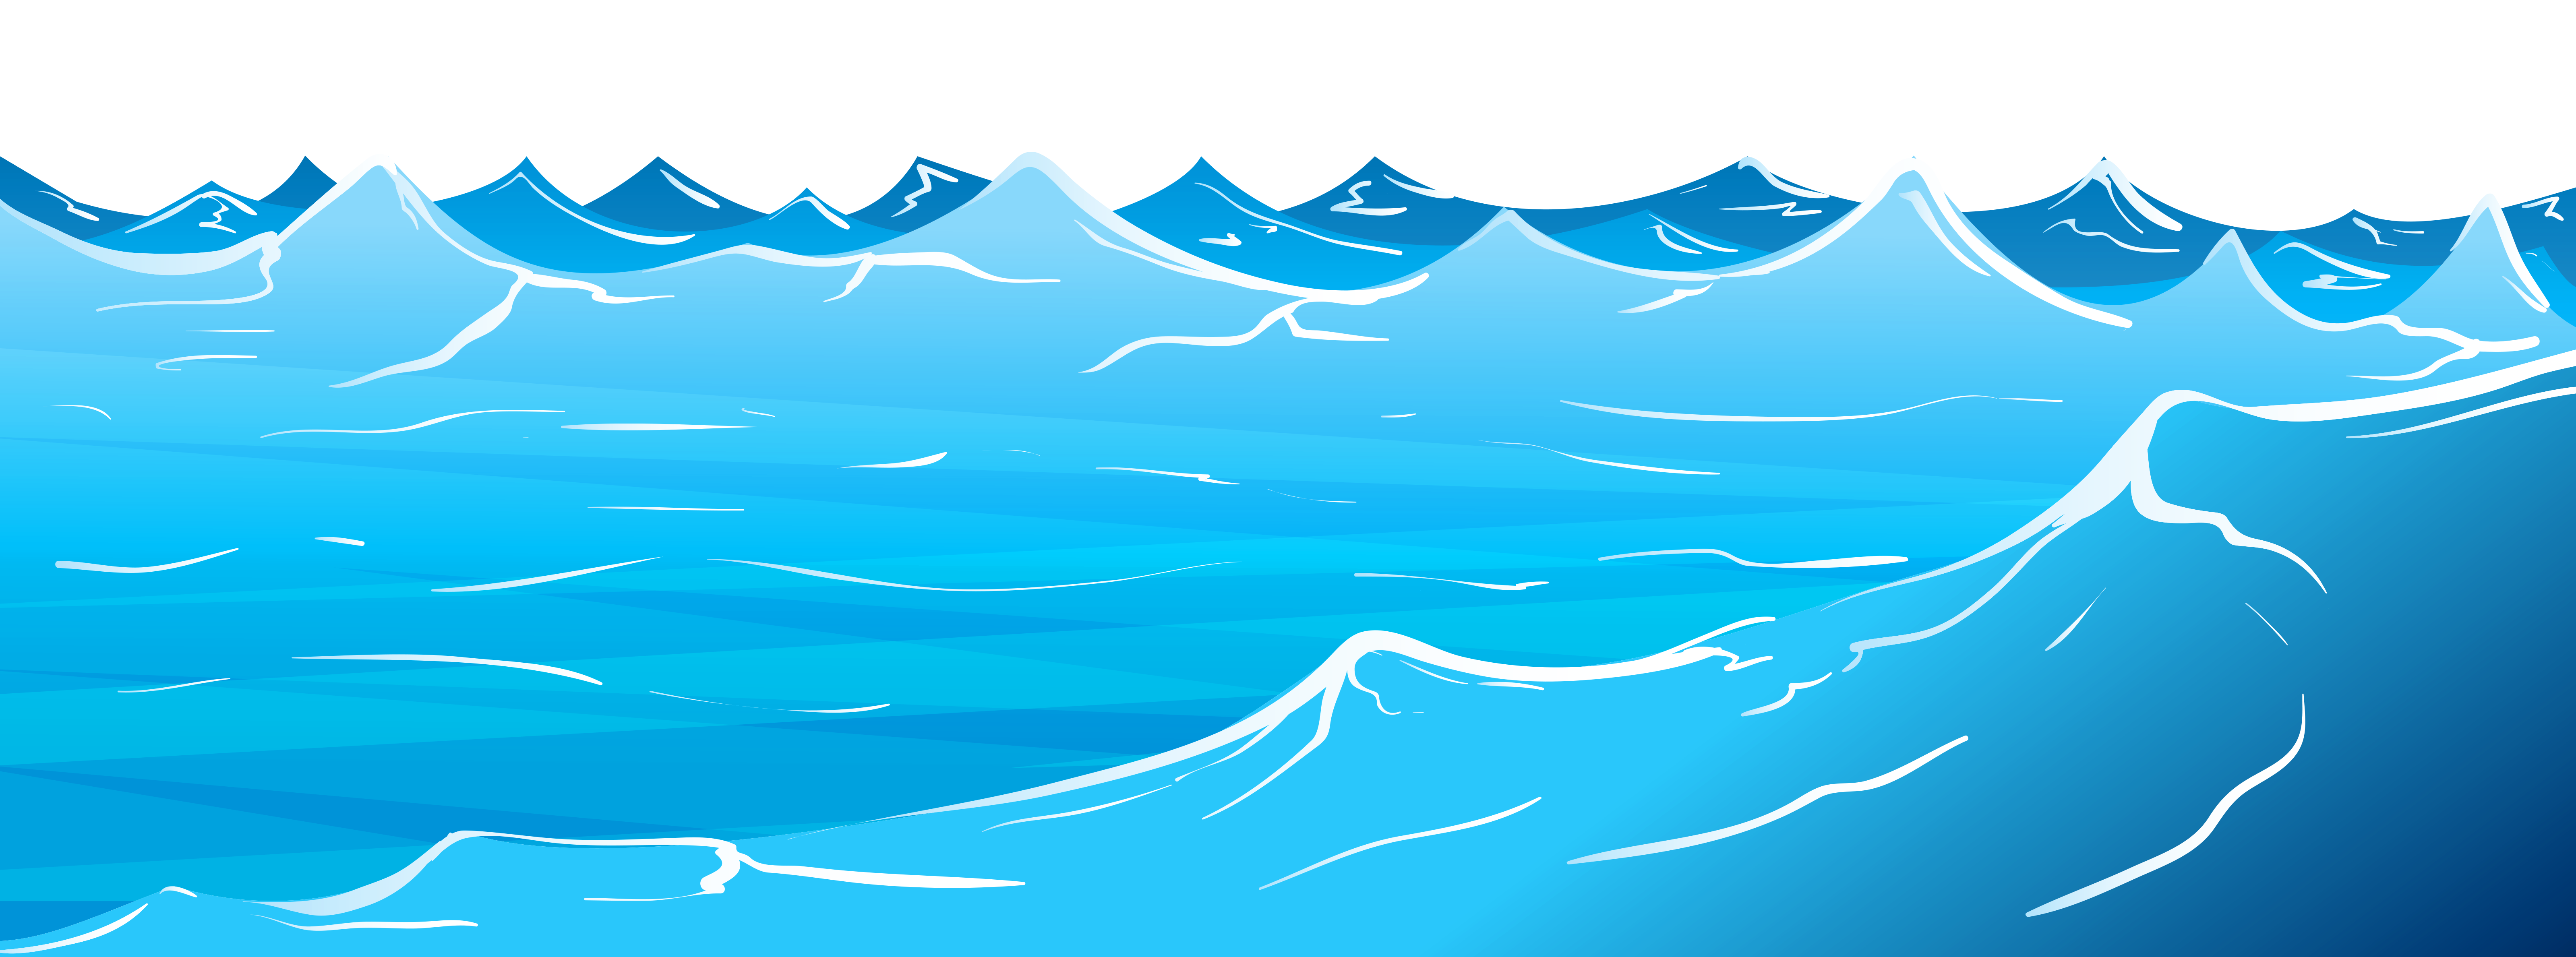 What is in water. Clipart rock ocean